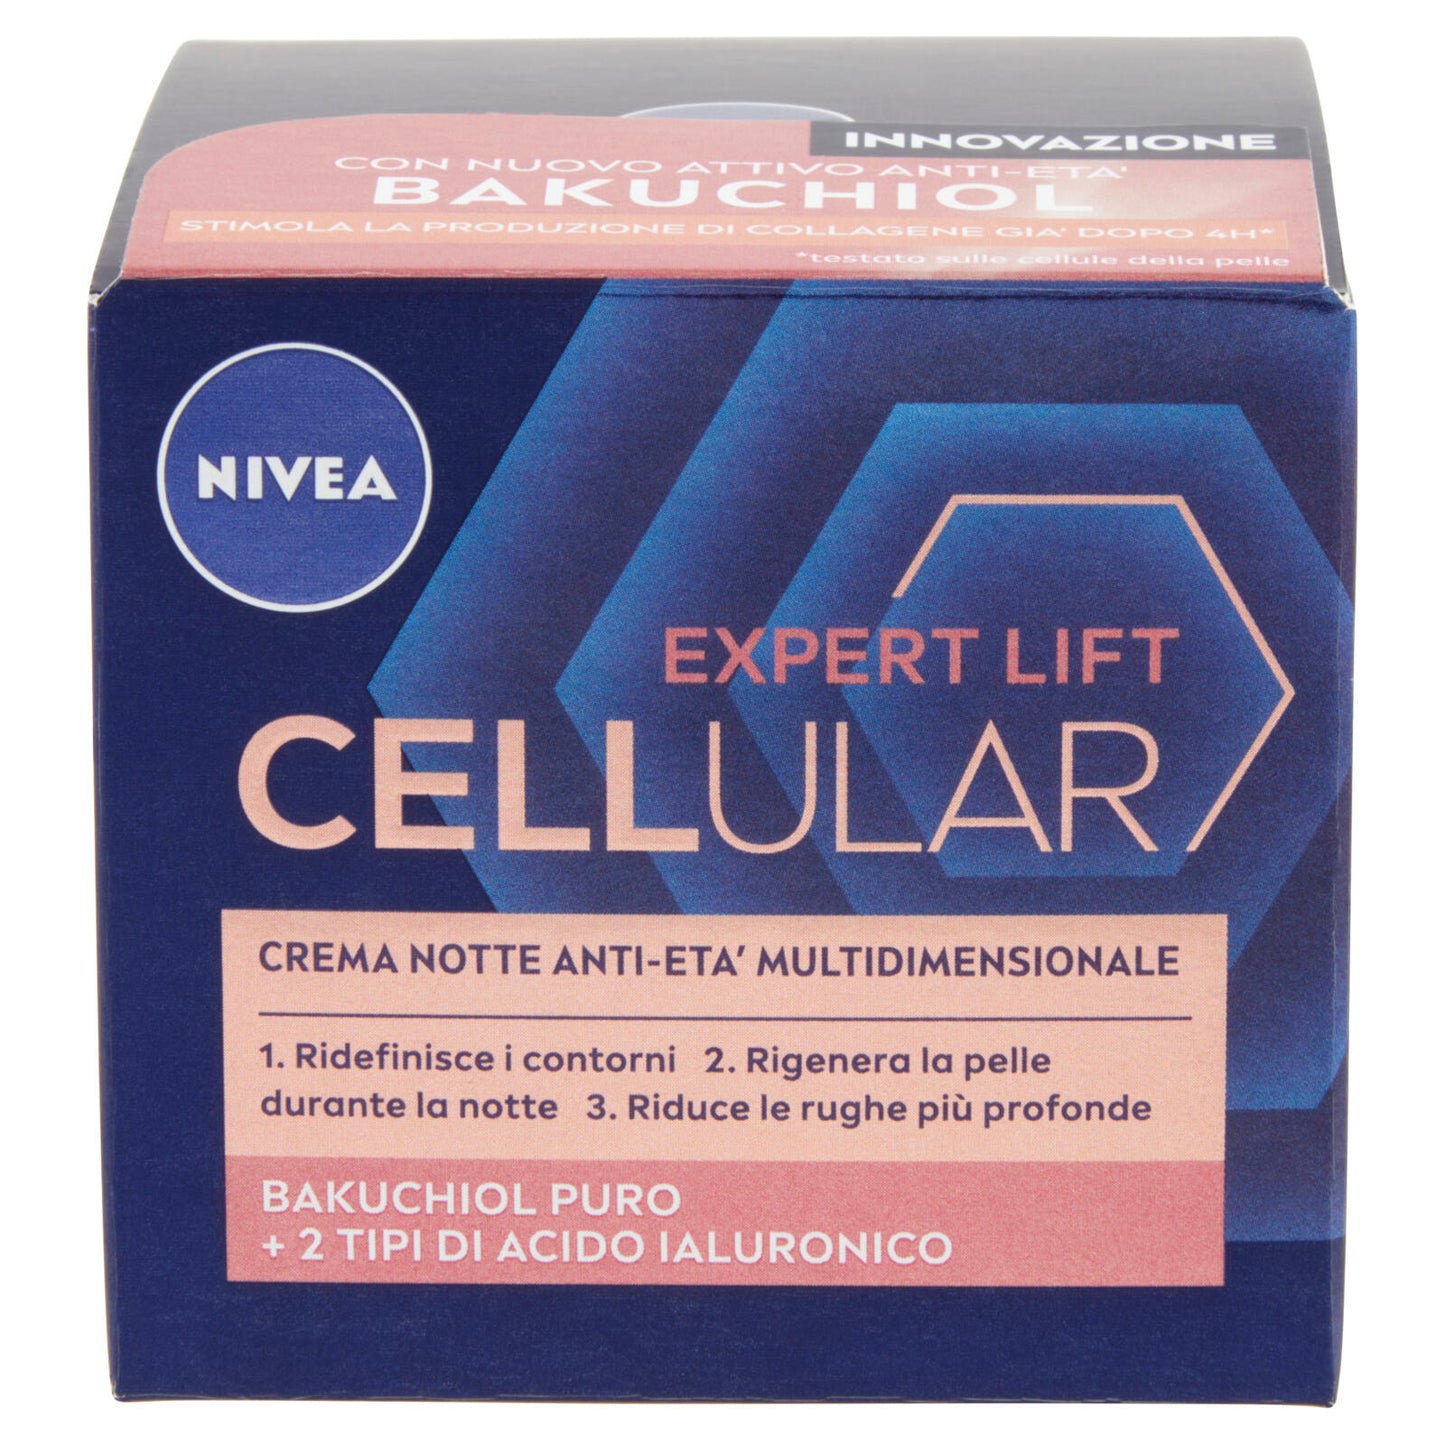 Nivea Expert Lift Cellular Crema Notte Anti-Età Multidimensionale 50 ml